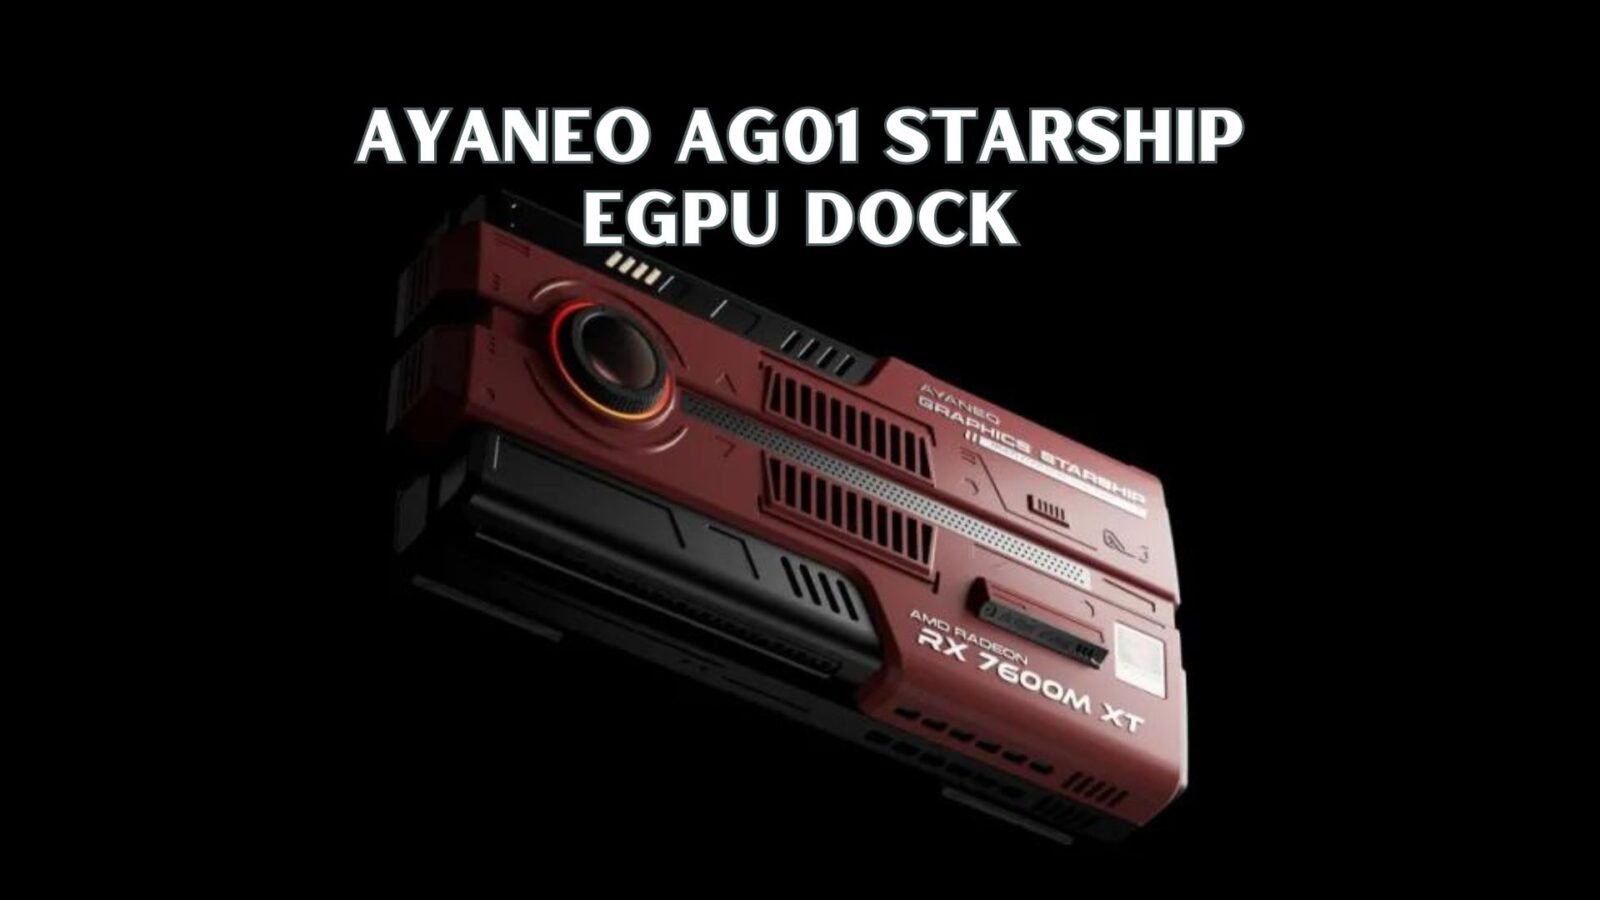 AYANEO AG01 Starship eGPU dock announced